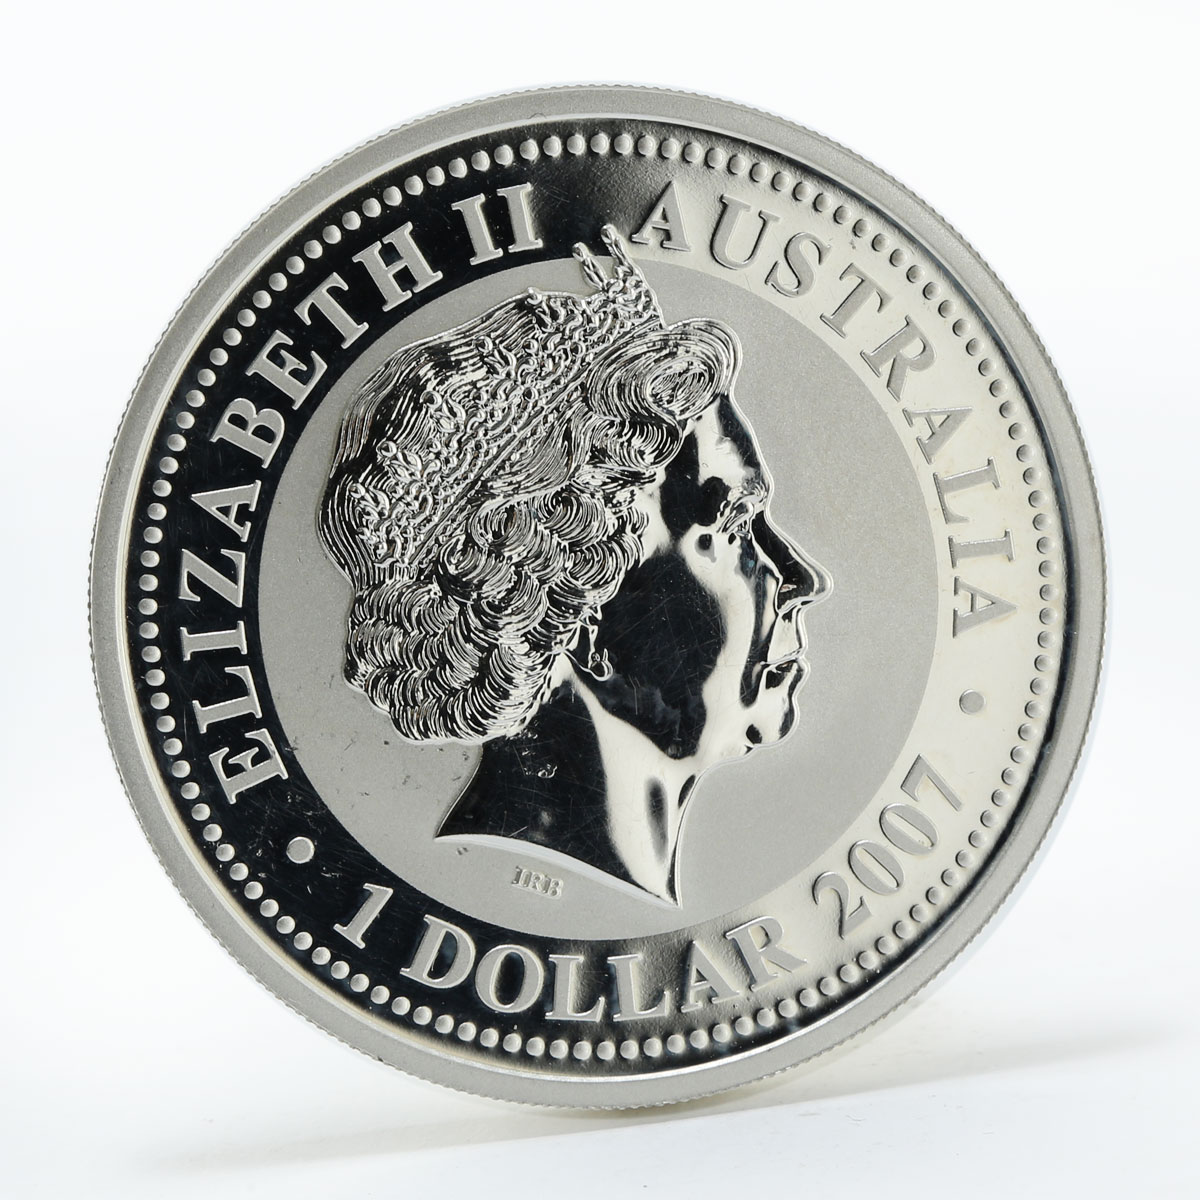 Australia 1dollar Year of Mouse Rat Lunar Series I silver coin 1 oz 2008